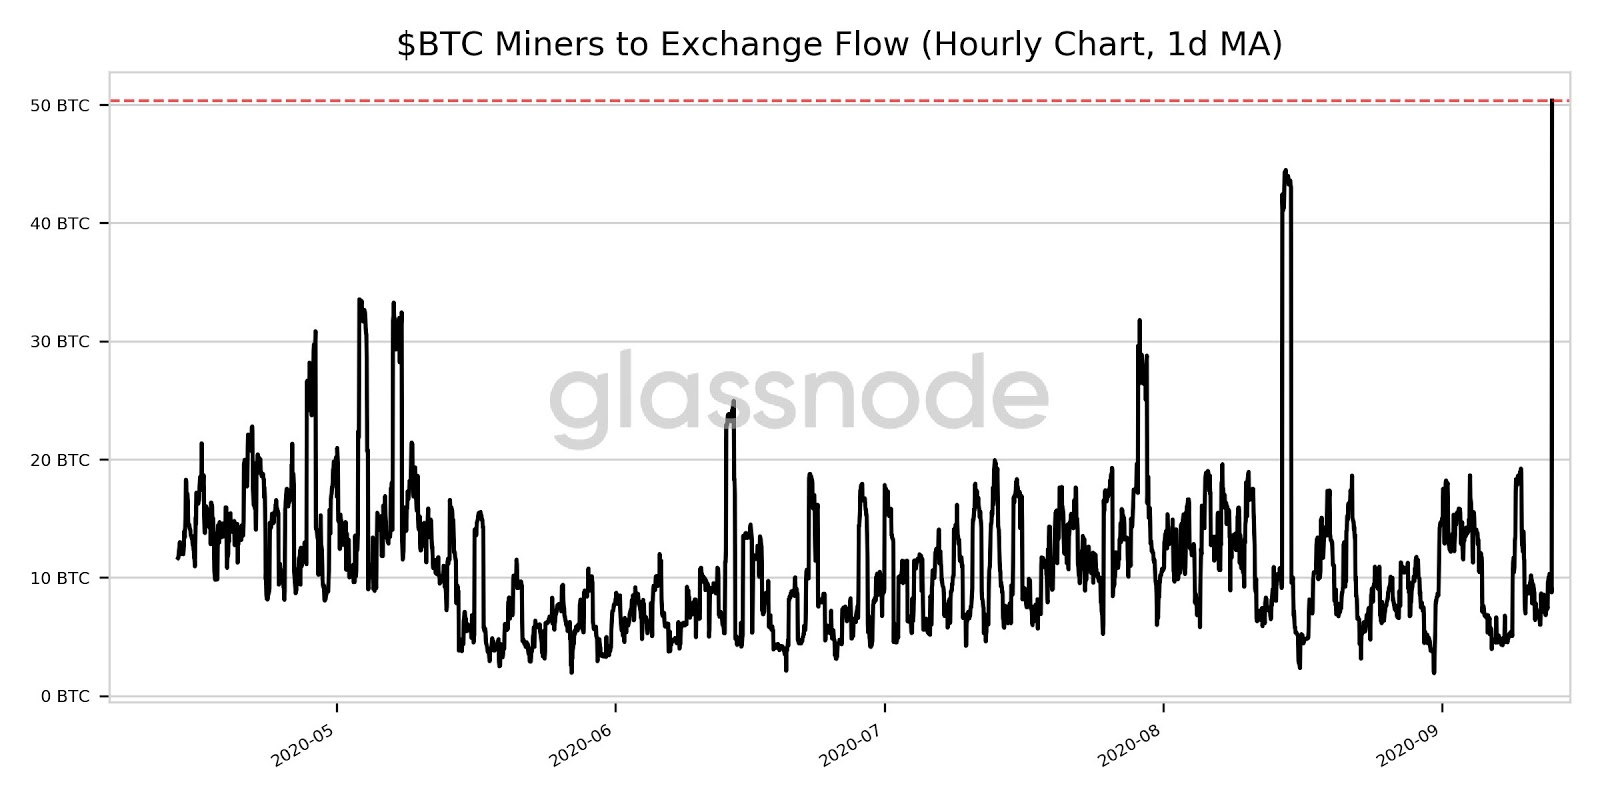 Bitcoin miners to exchange flow